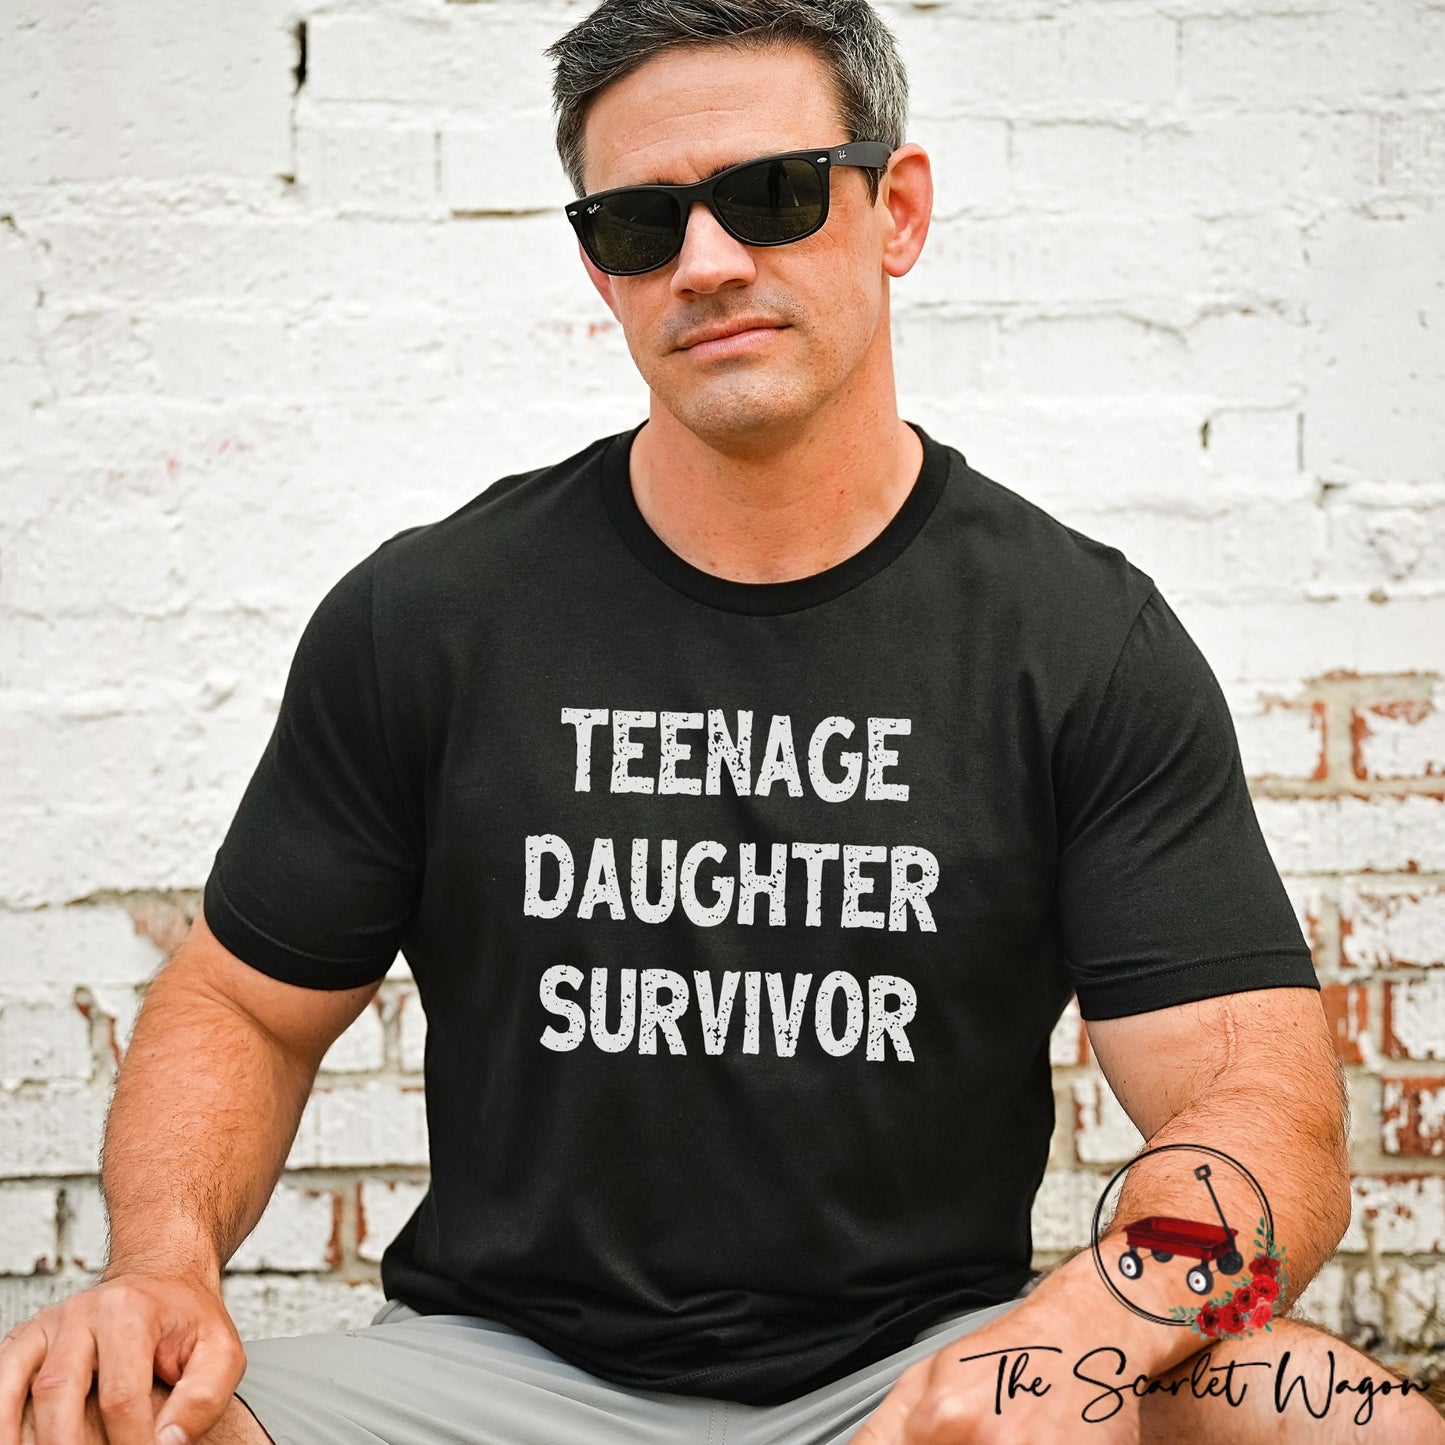 Teenage Daughter Survivor Premium Tee Scarlet Wagon 